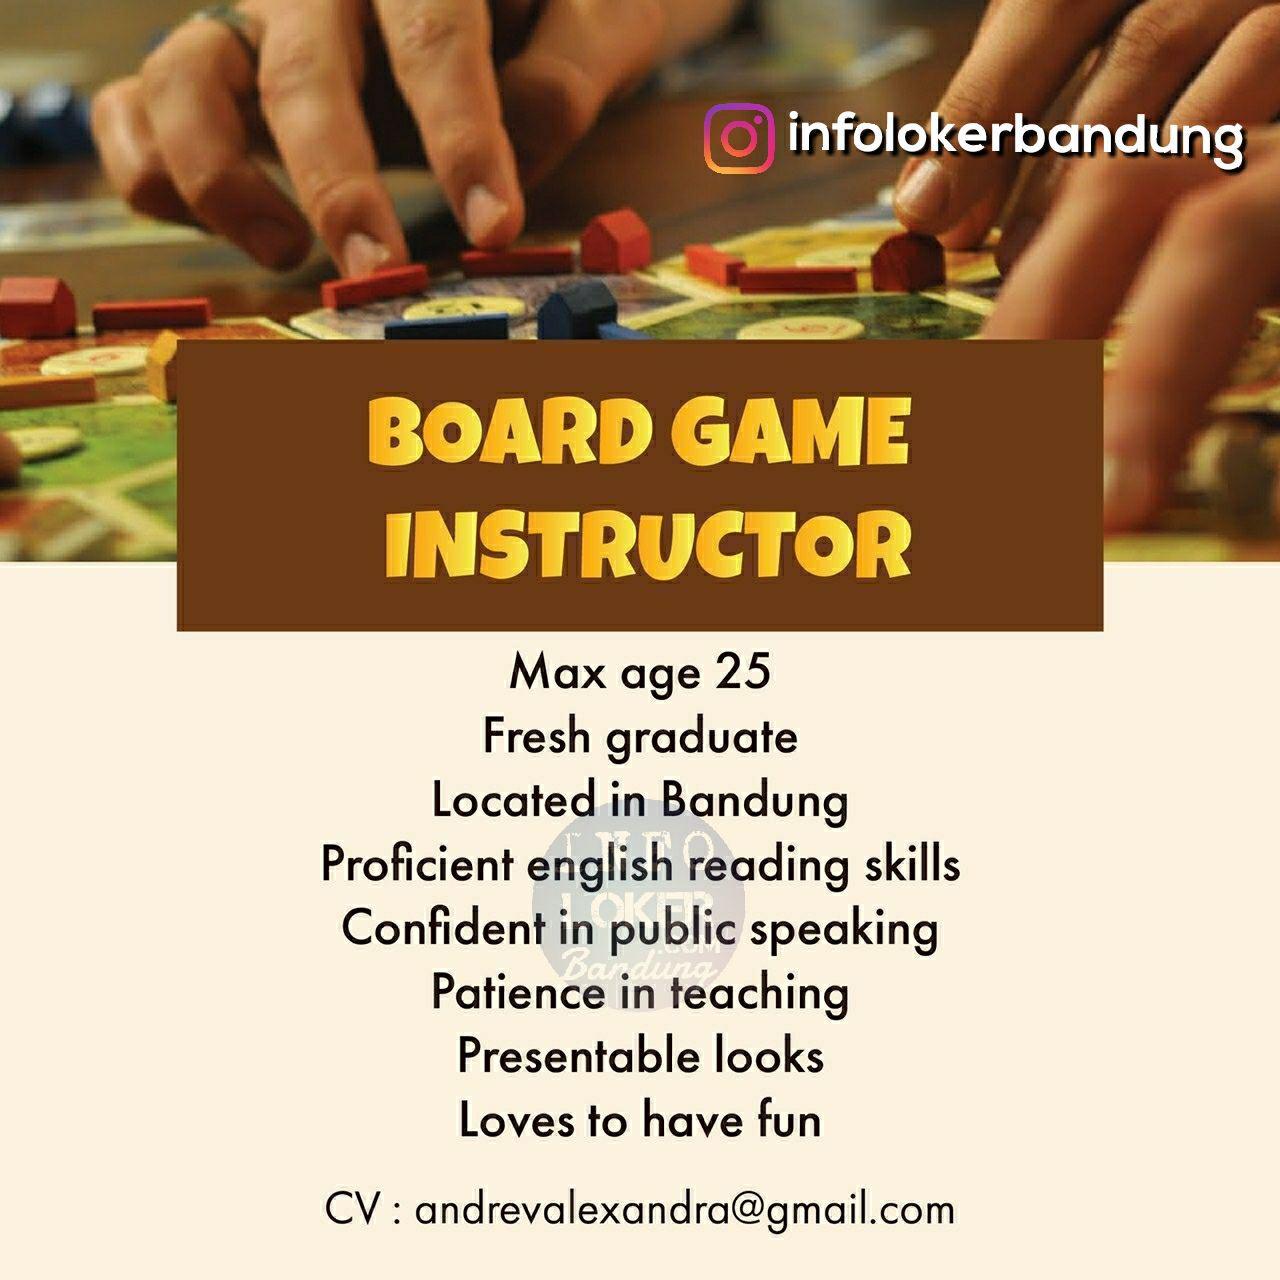 Lowongan Kerja Board Game Instructor Bandung September 2018